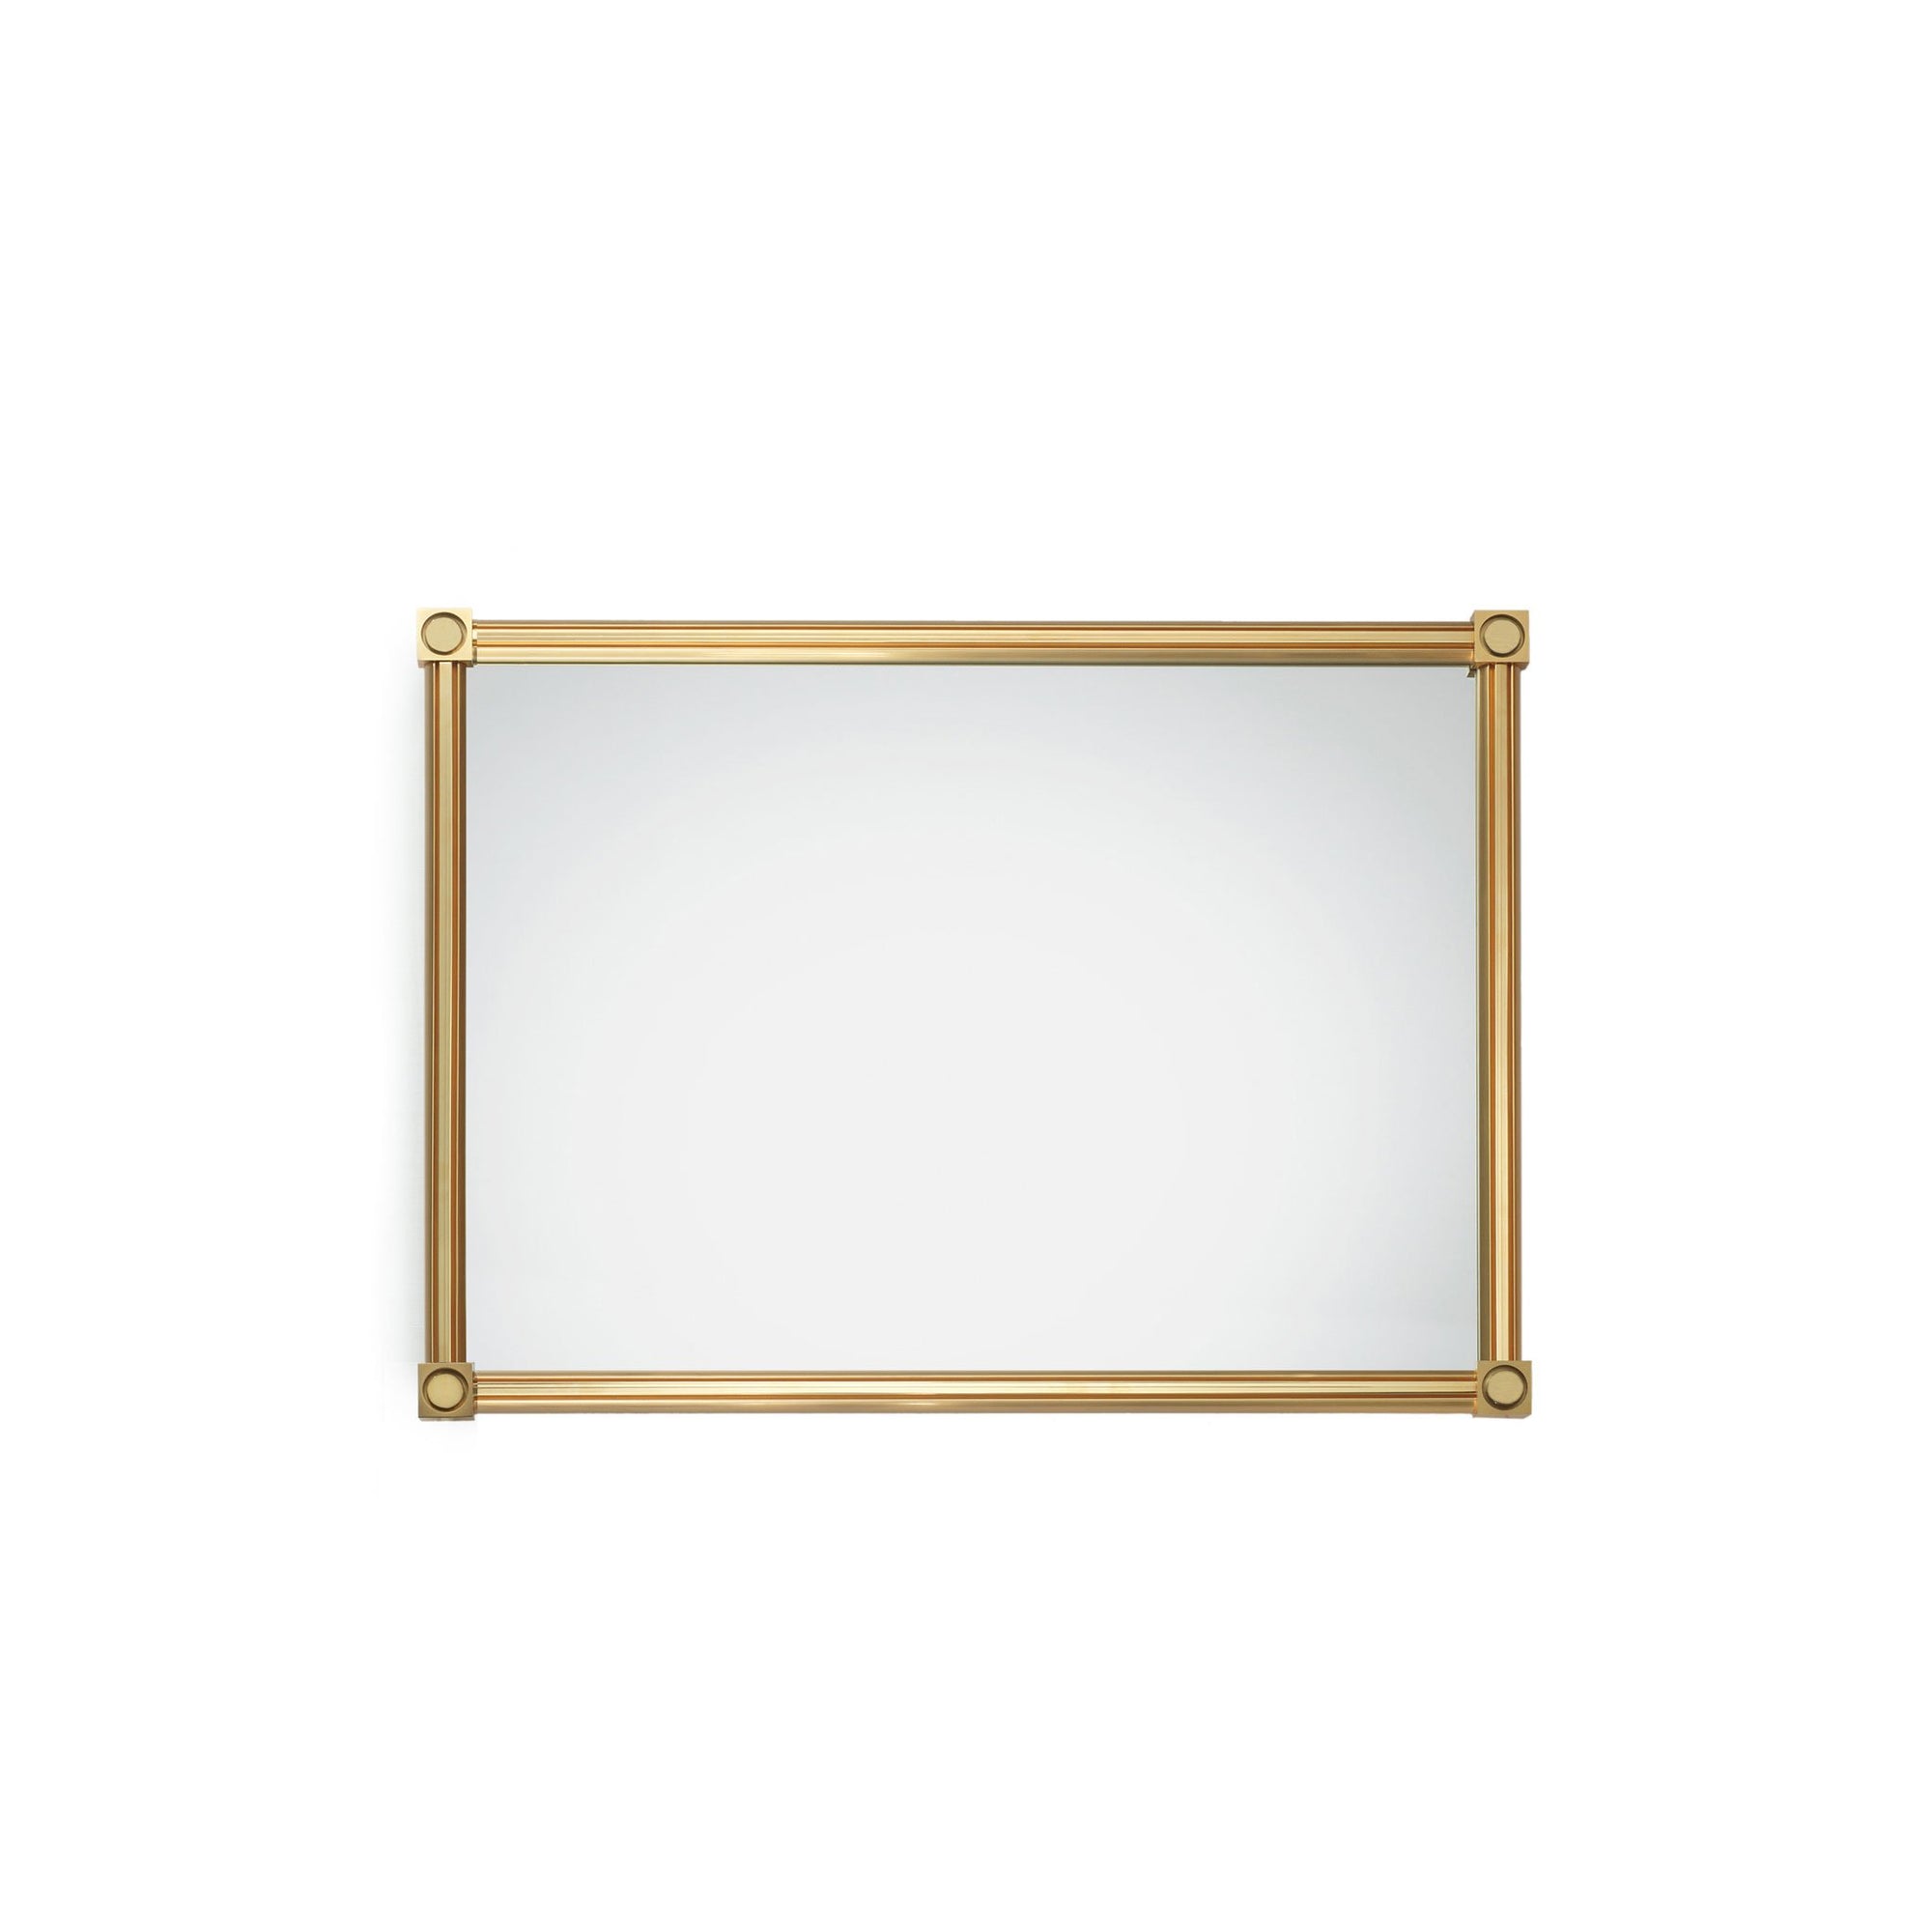 4269M21-GP Sherle Wagner International Modern Mirror in Gold Plate metal finish